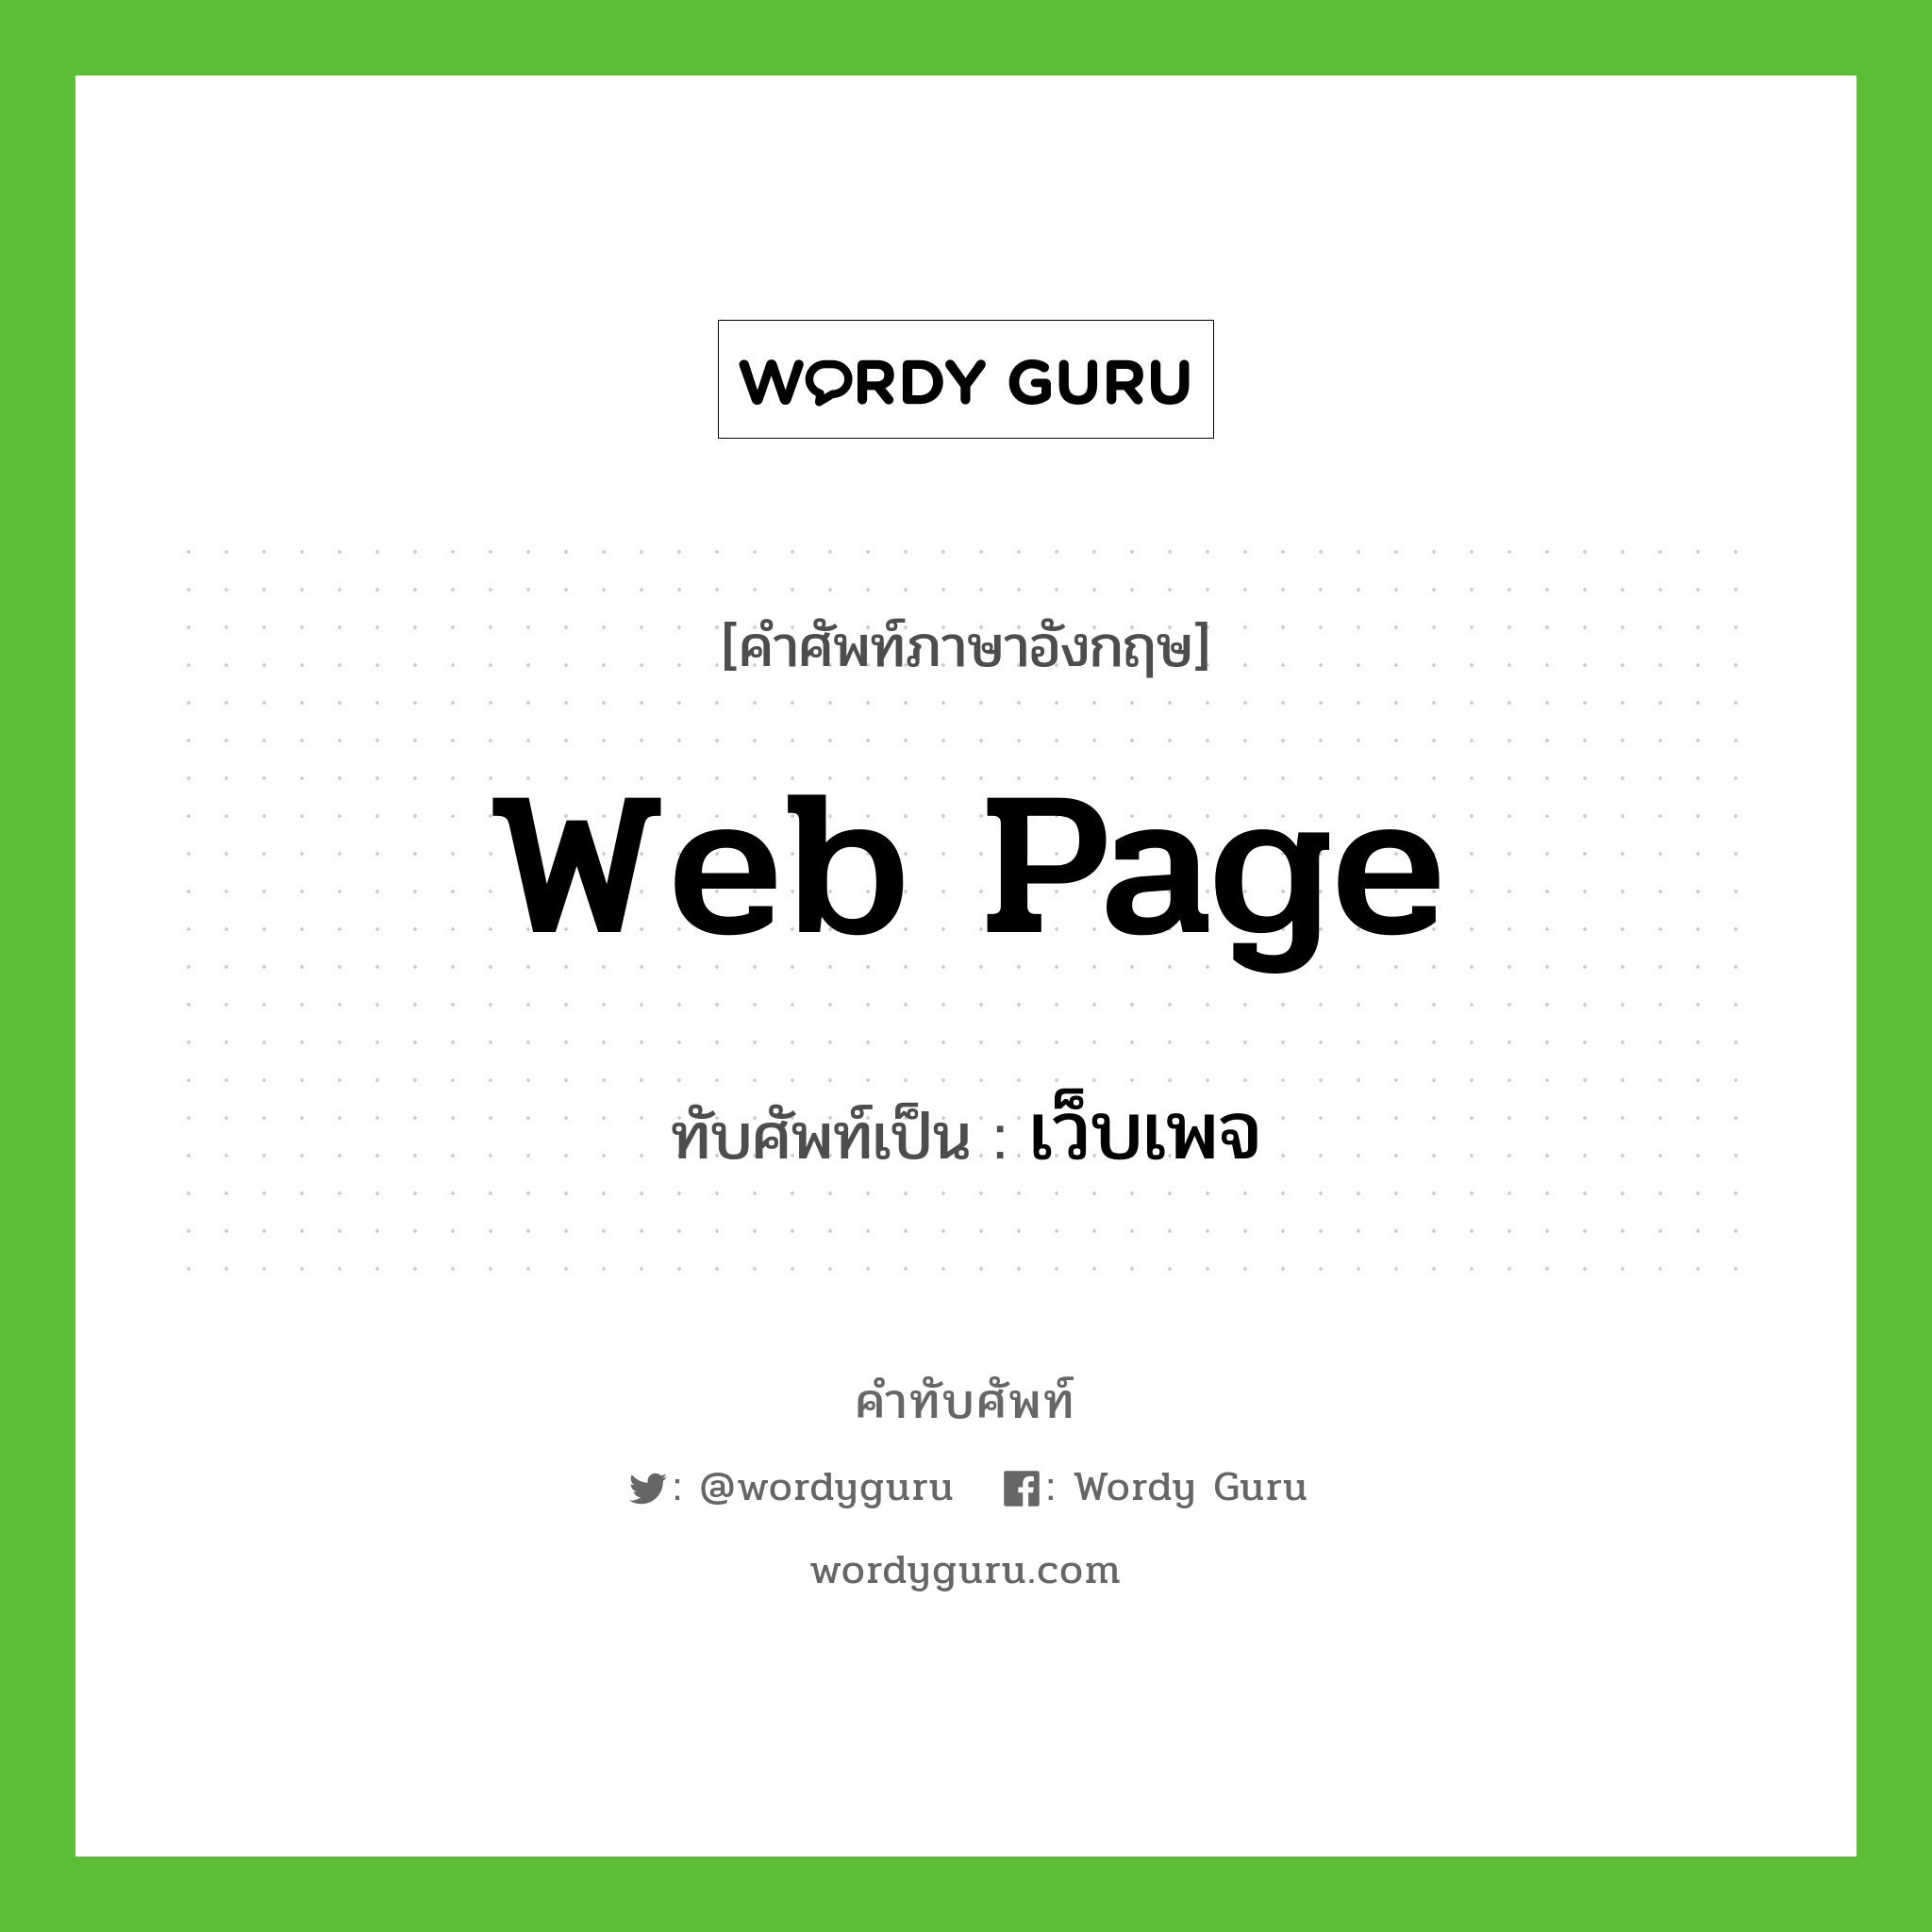 web page เขียนเป็นคำไทยว่าอะไร?, คำศัพท์ภาษาอังกฤษ web page ทับศัพท์เป็น เว็บเพจ